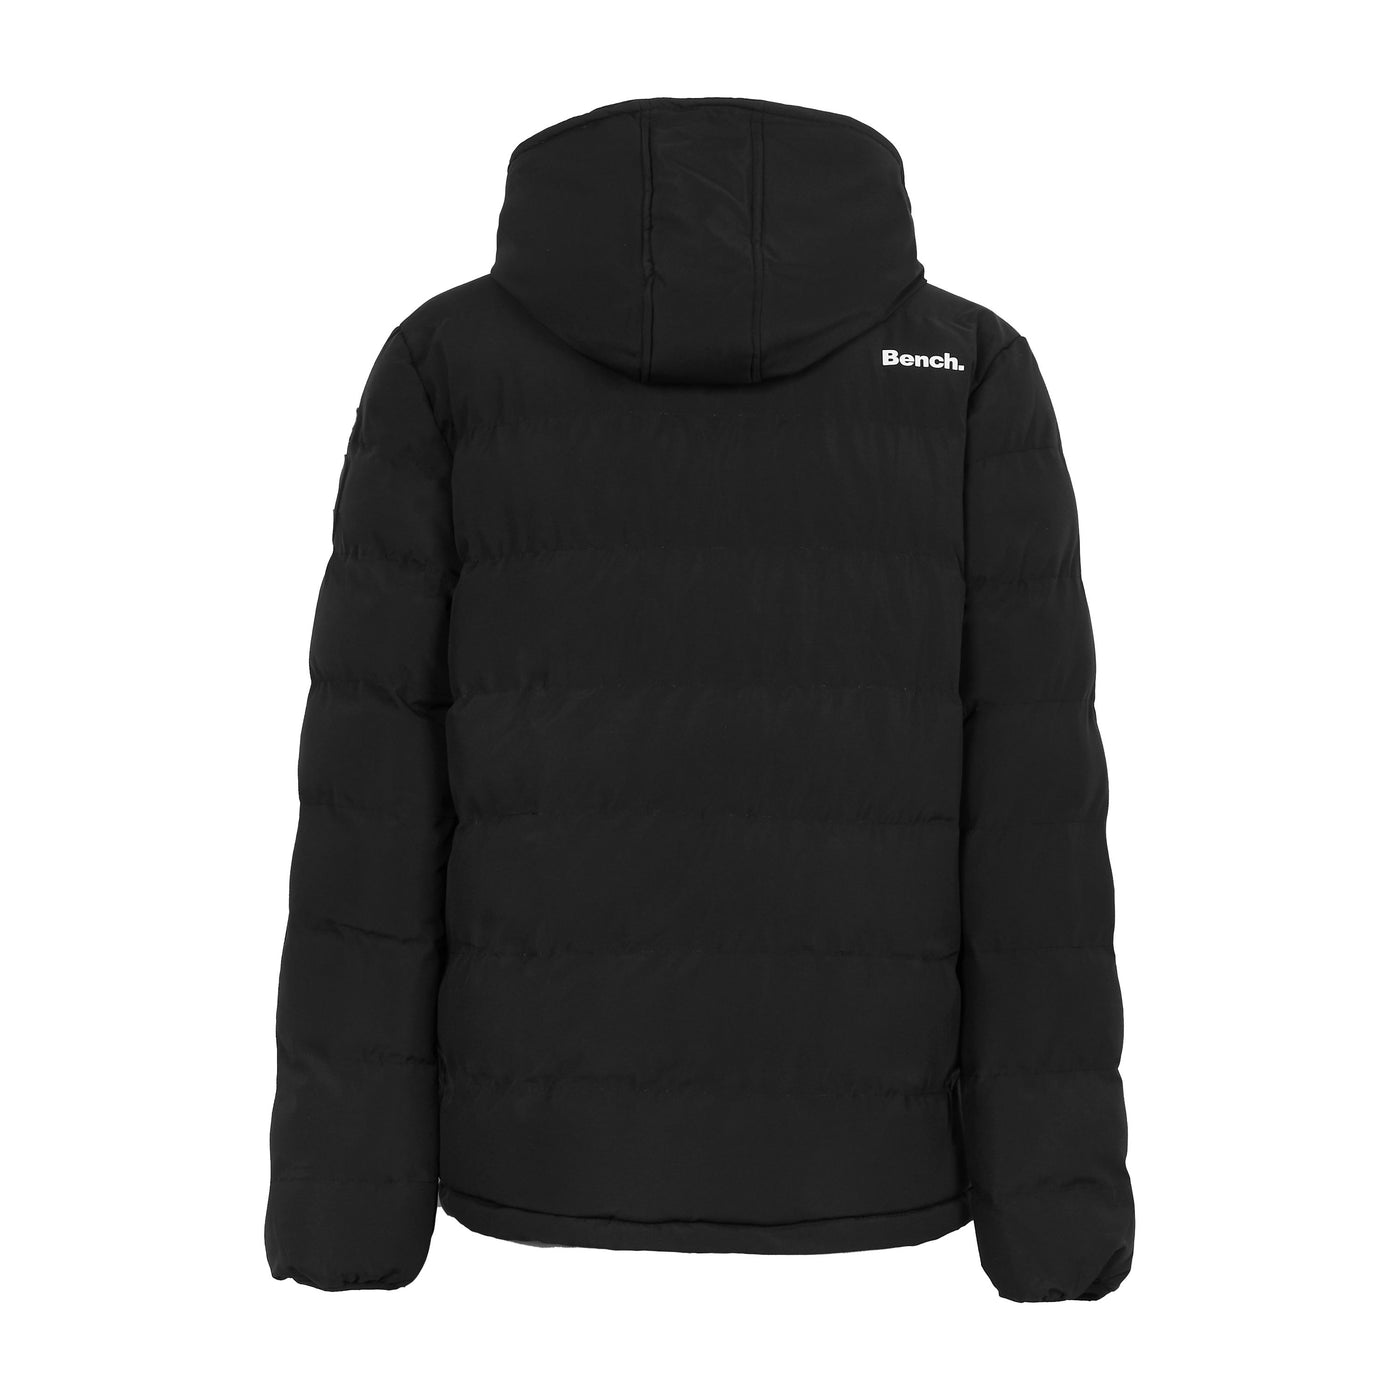 Bench Original Mens Heavy Weight Fleece Lined Padded Ultra Warm Winter Black Hooded Coat Jacket Zip Pockets Inside Zip Pocket